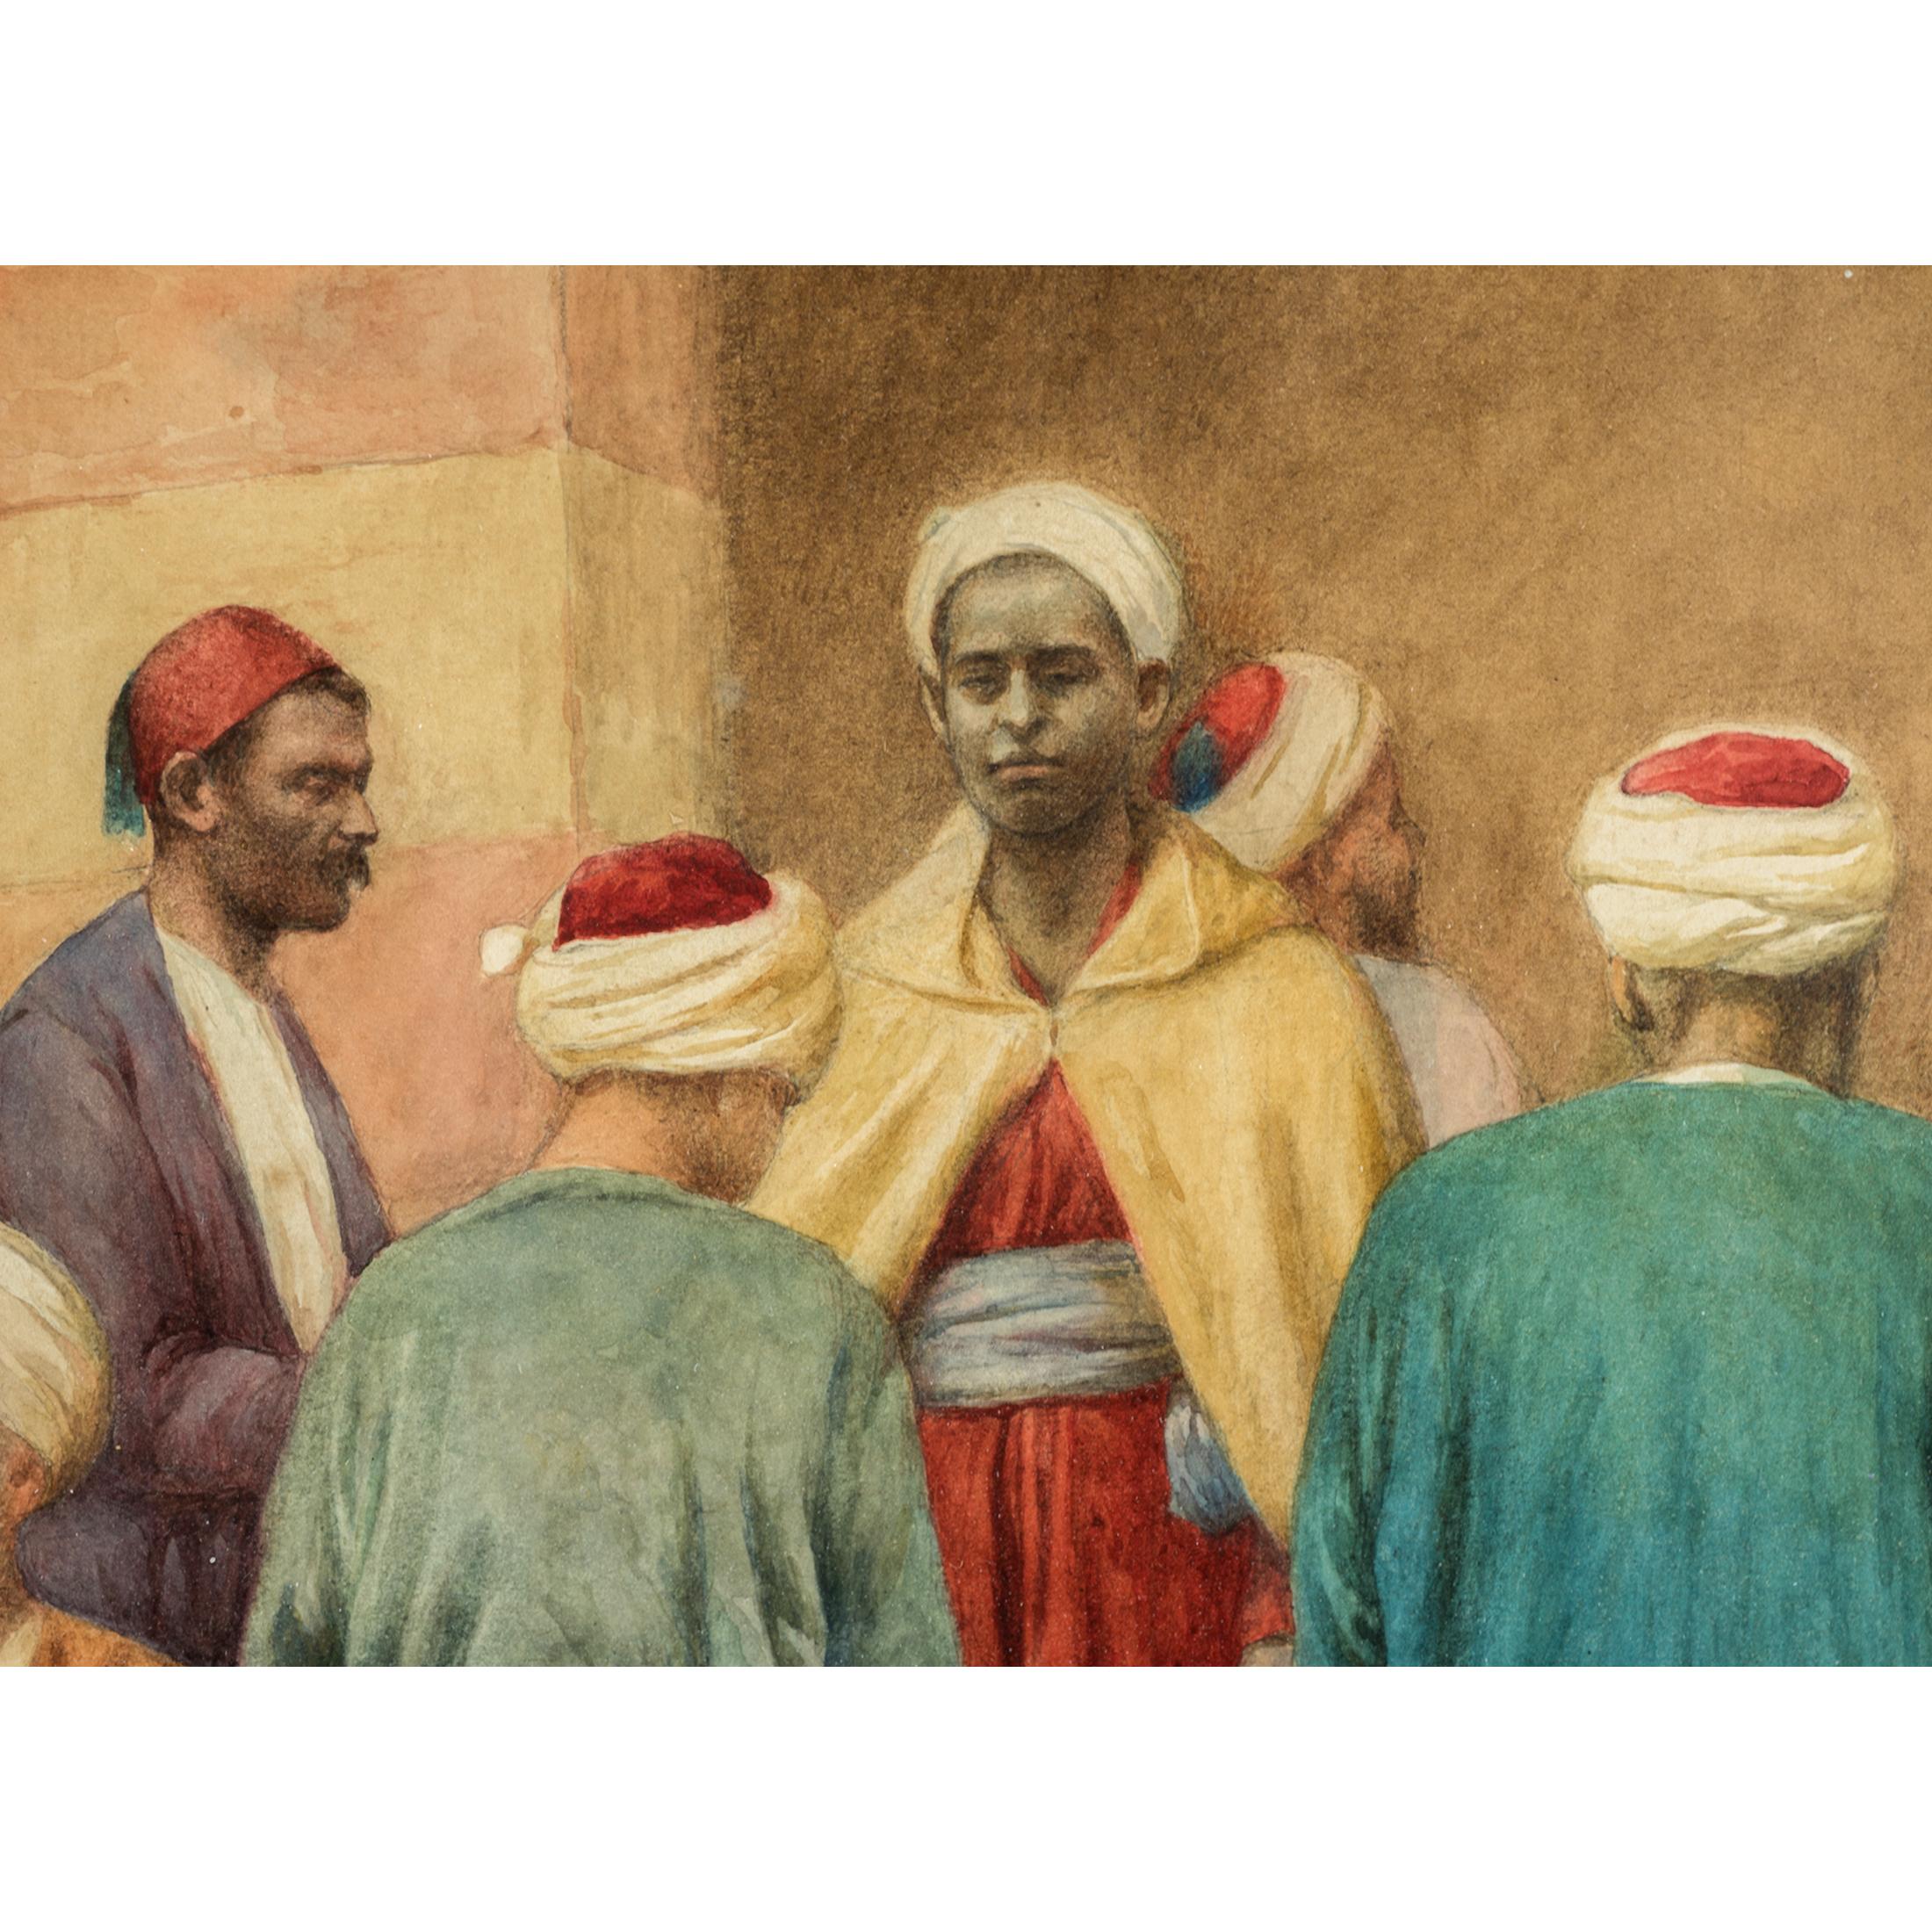 Islamic Original 19th Century Orientalist Watercolor Painting by Enrico Tarenghi